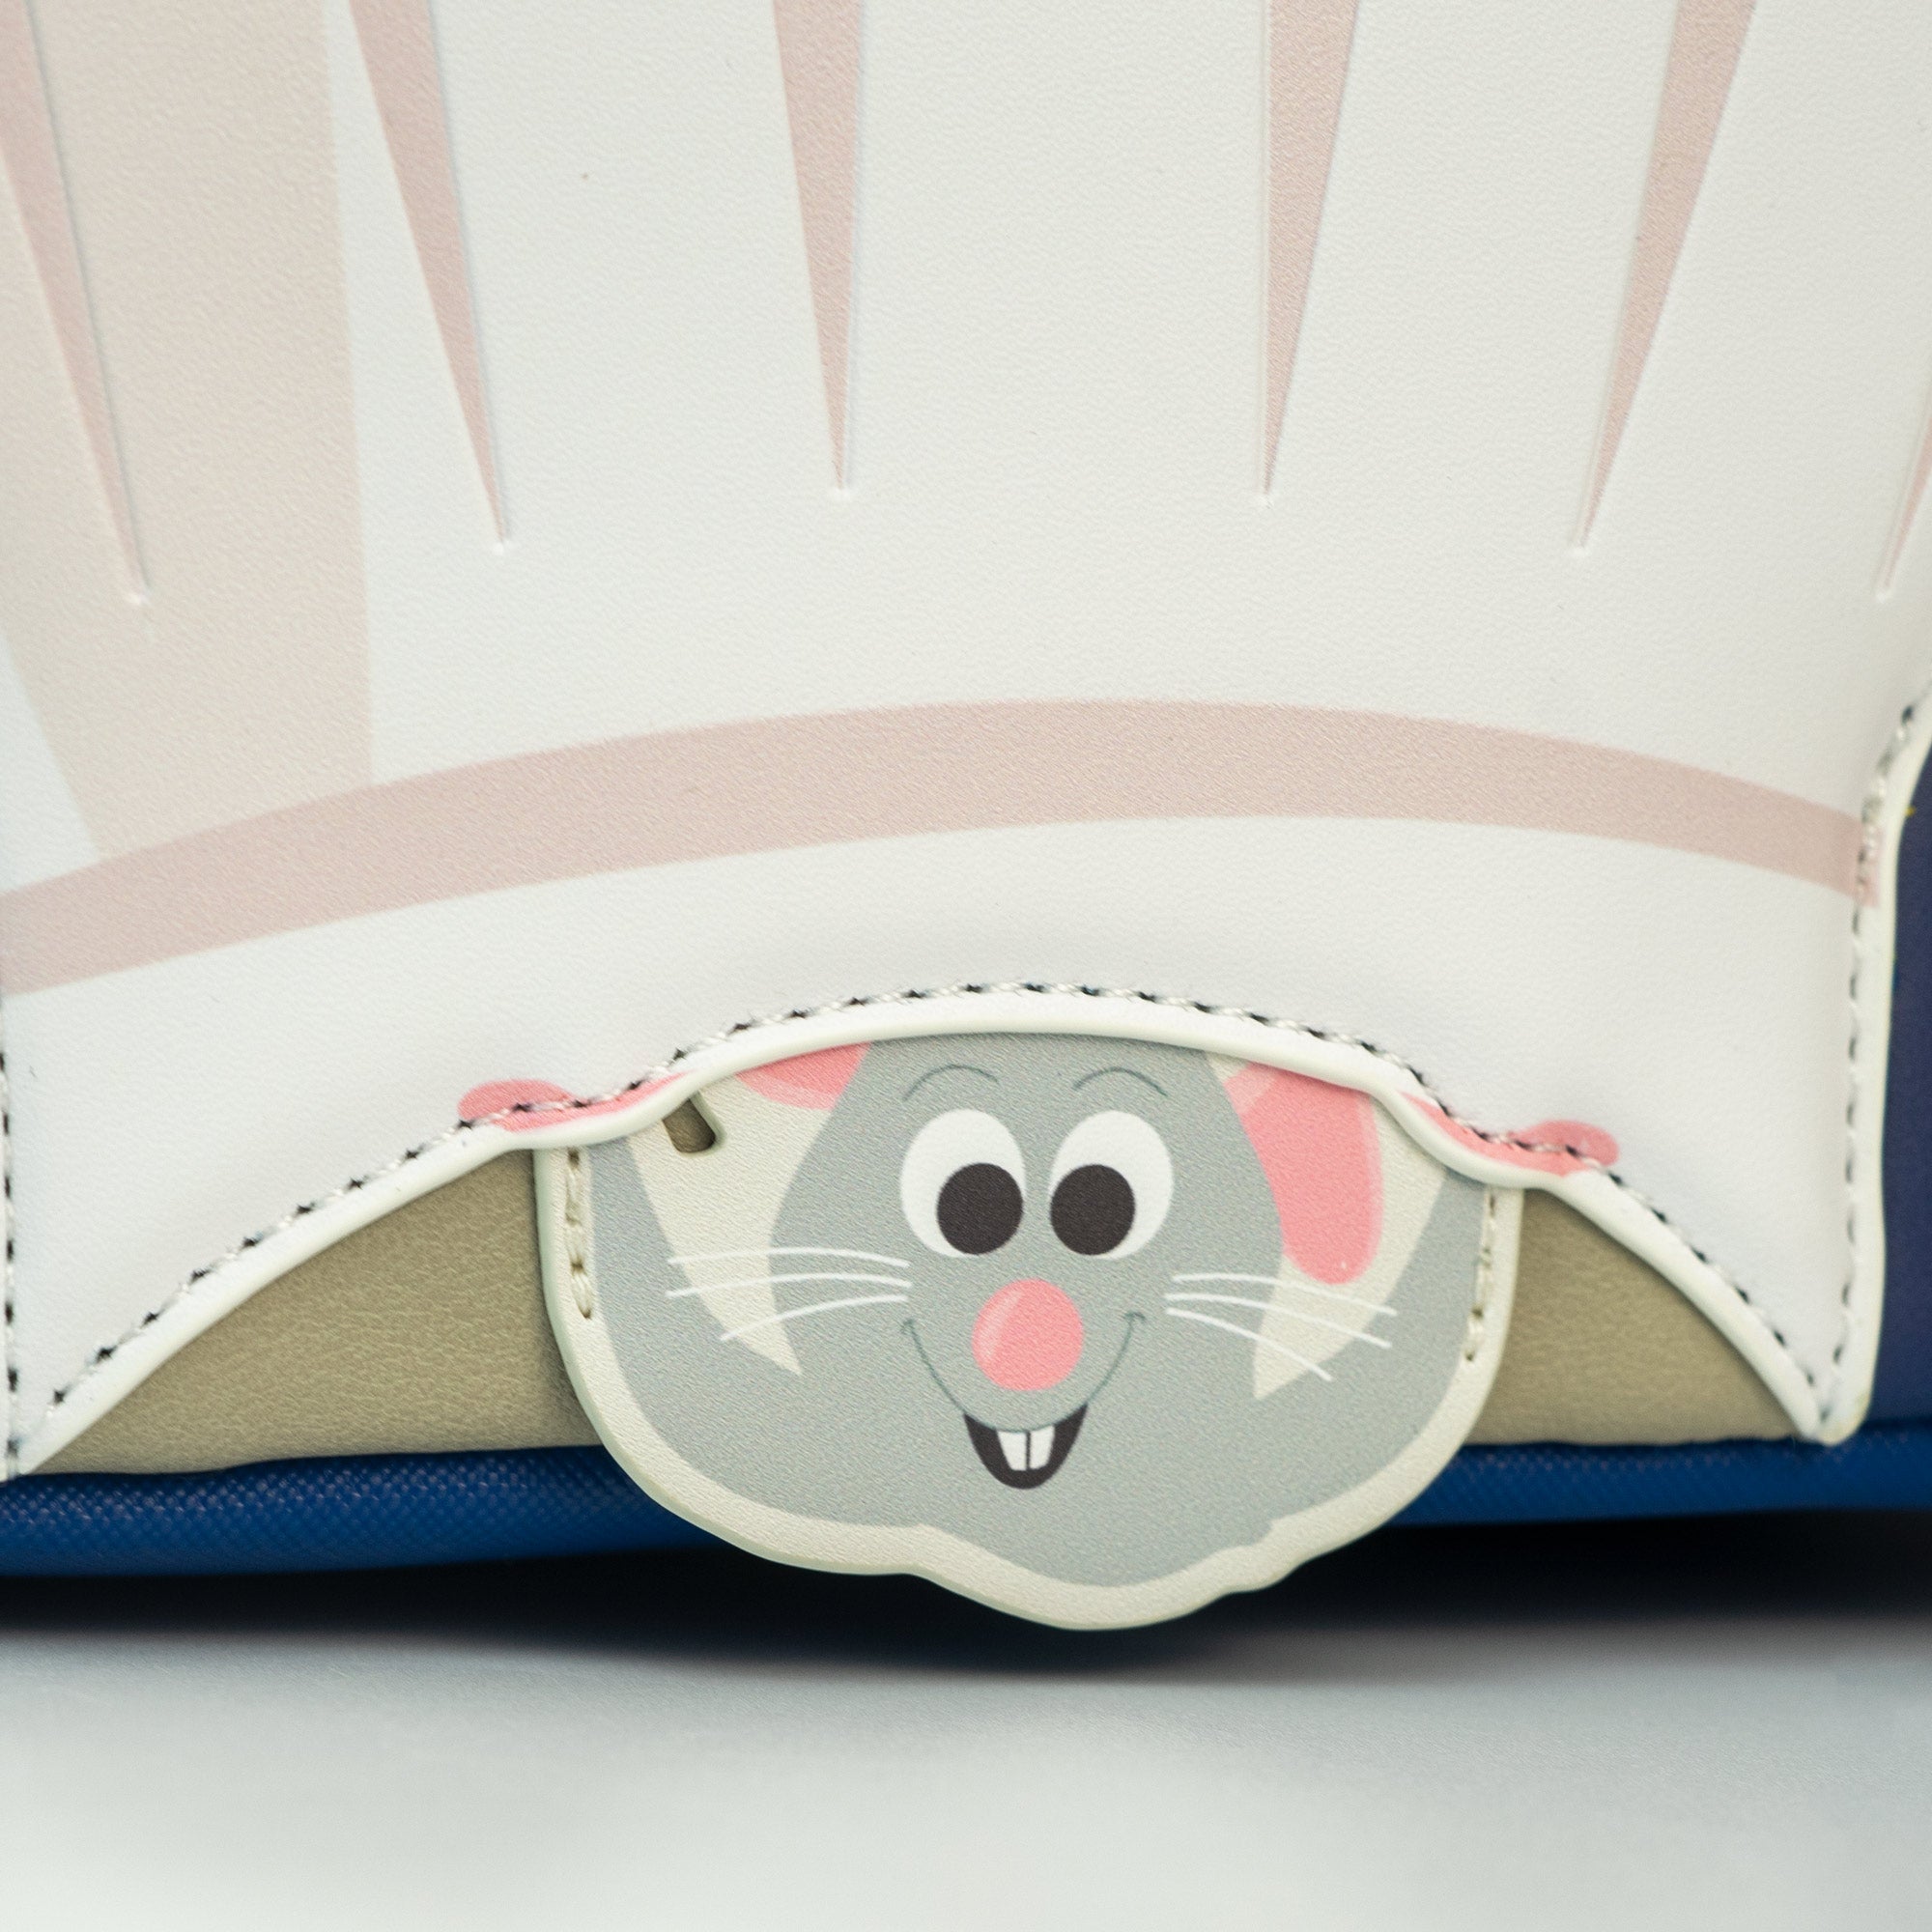 Loungefly x Disney Pixar Ratatouille Chef's Hat Mini Backpack - GeekCore